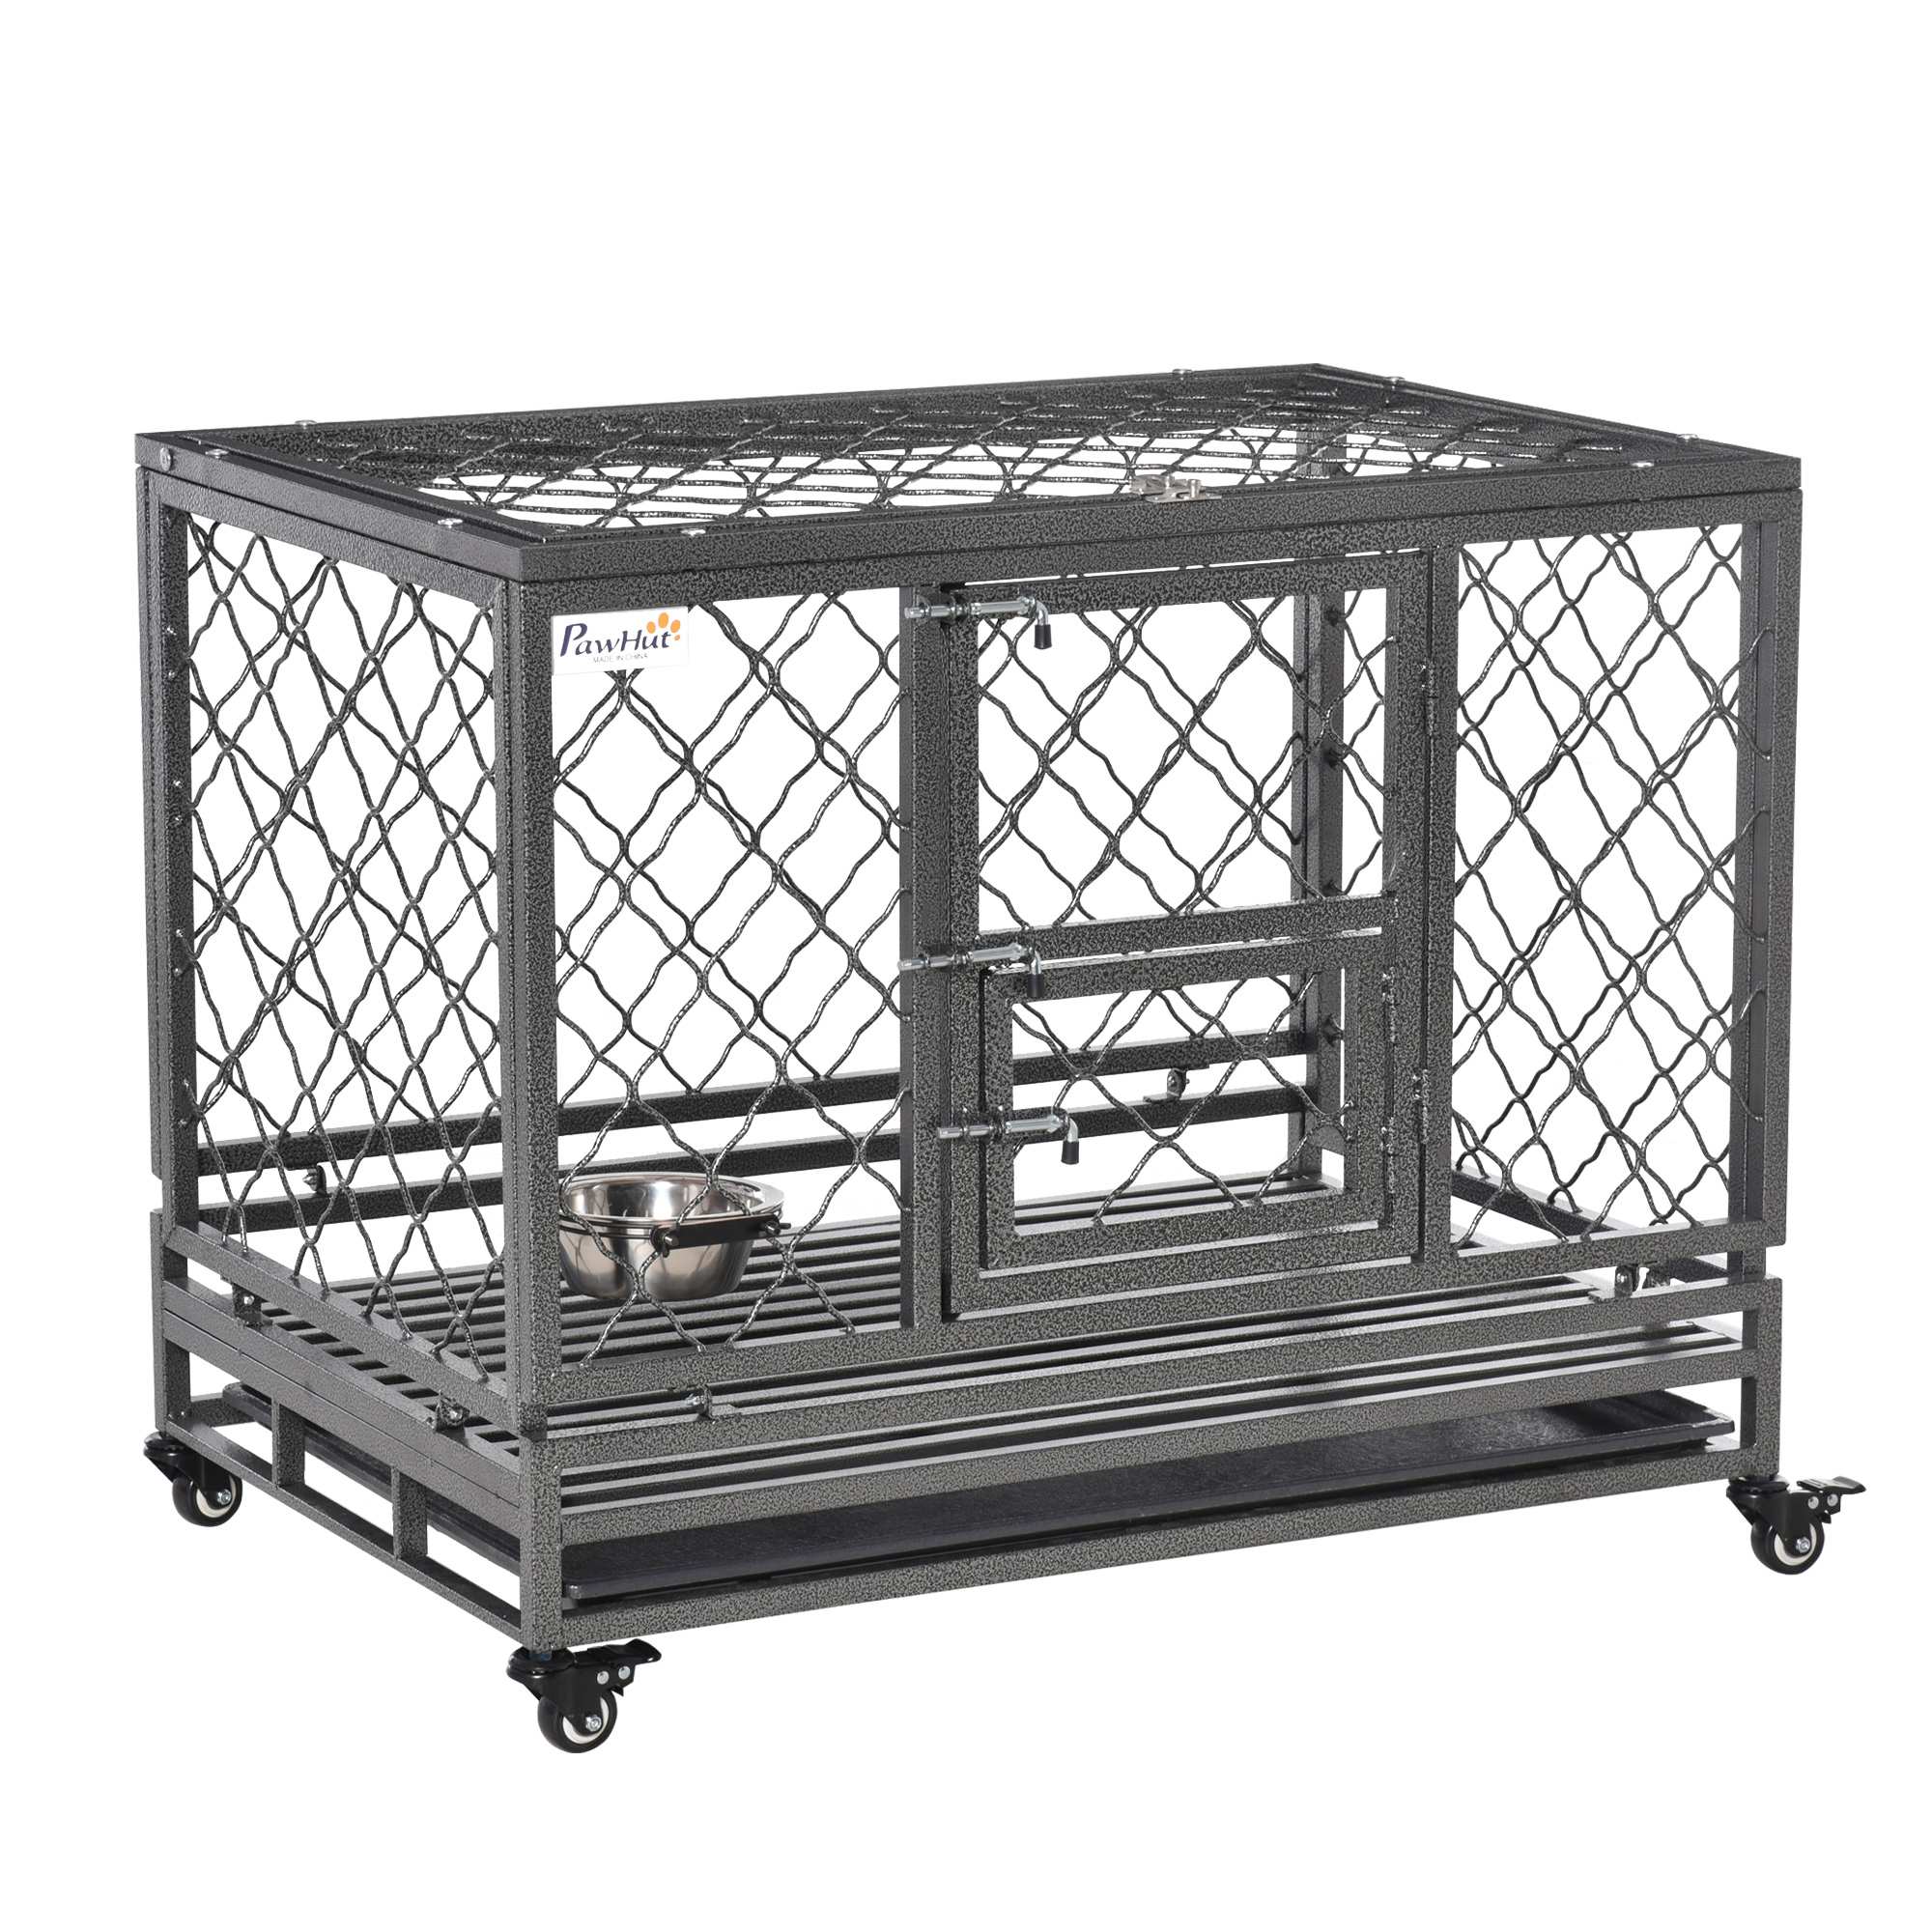 PawHut 365 Heavy Duty Dog Cage Metal Kennel with Wheels Tray and Food Bowl Black   Aosom.com